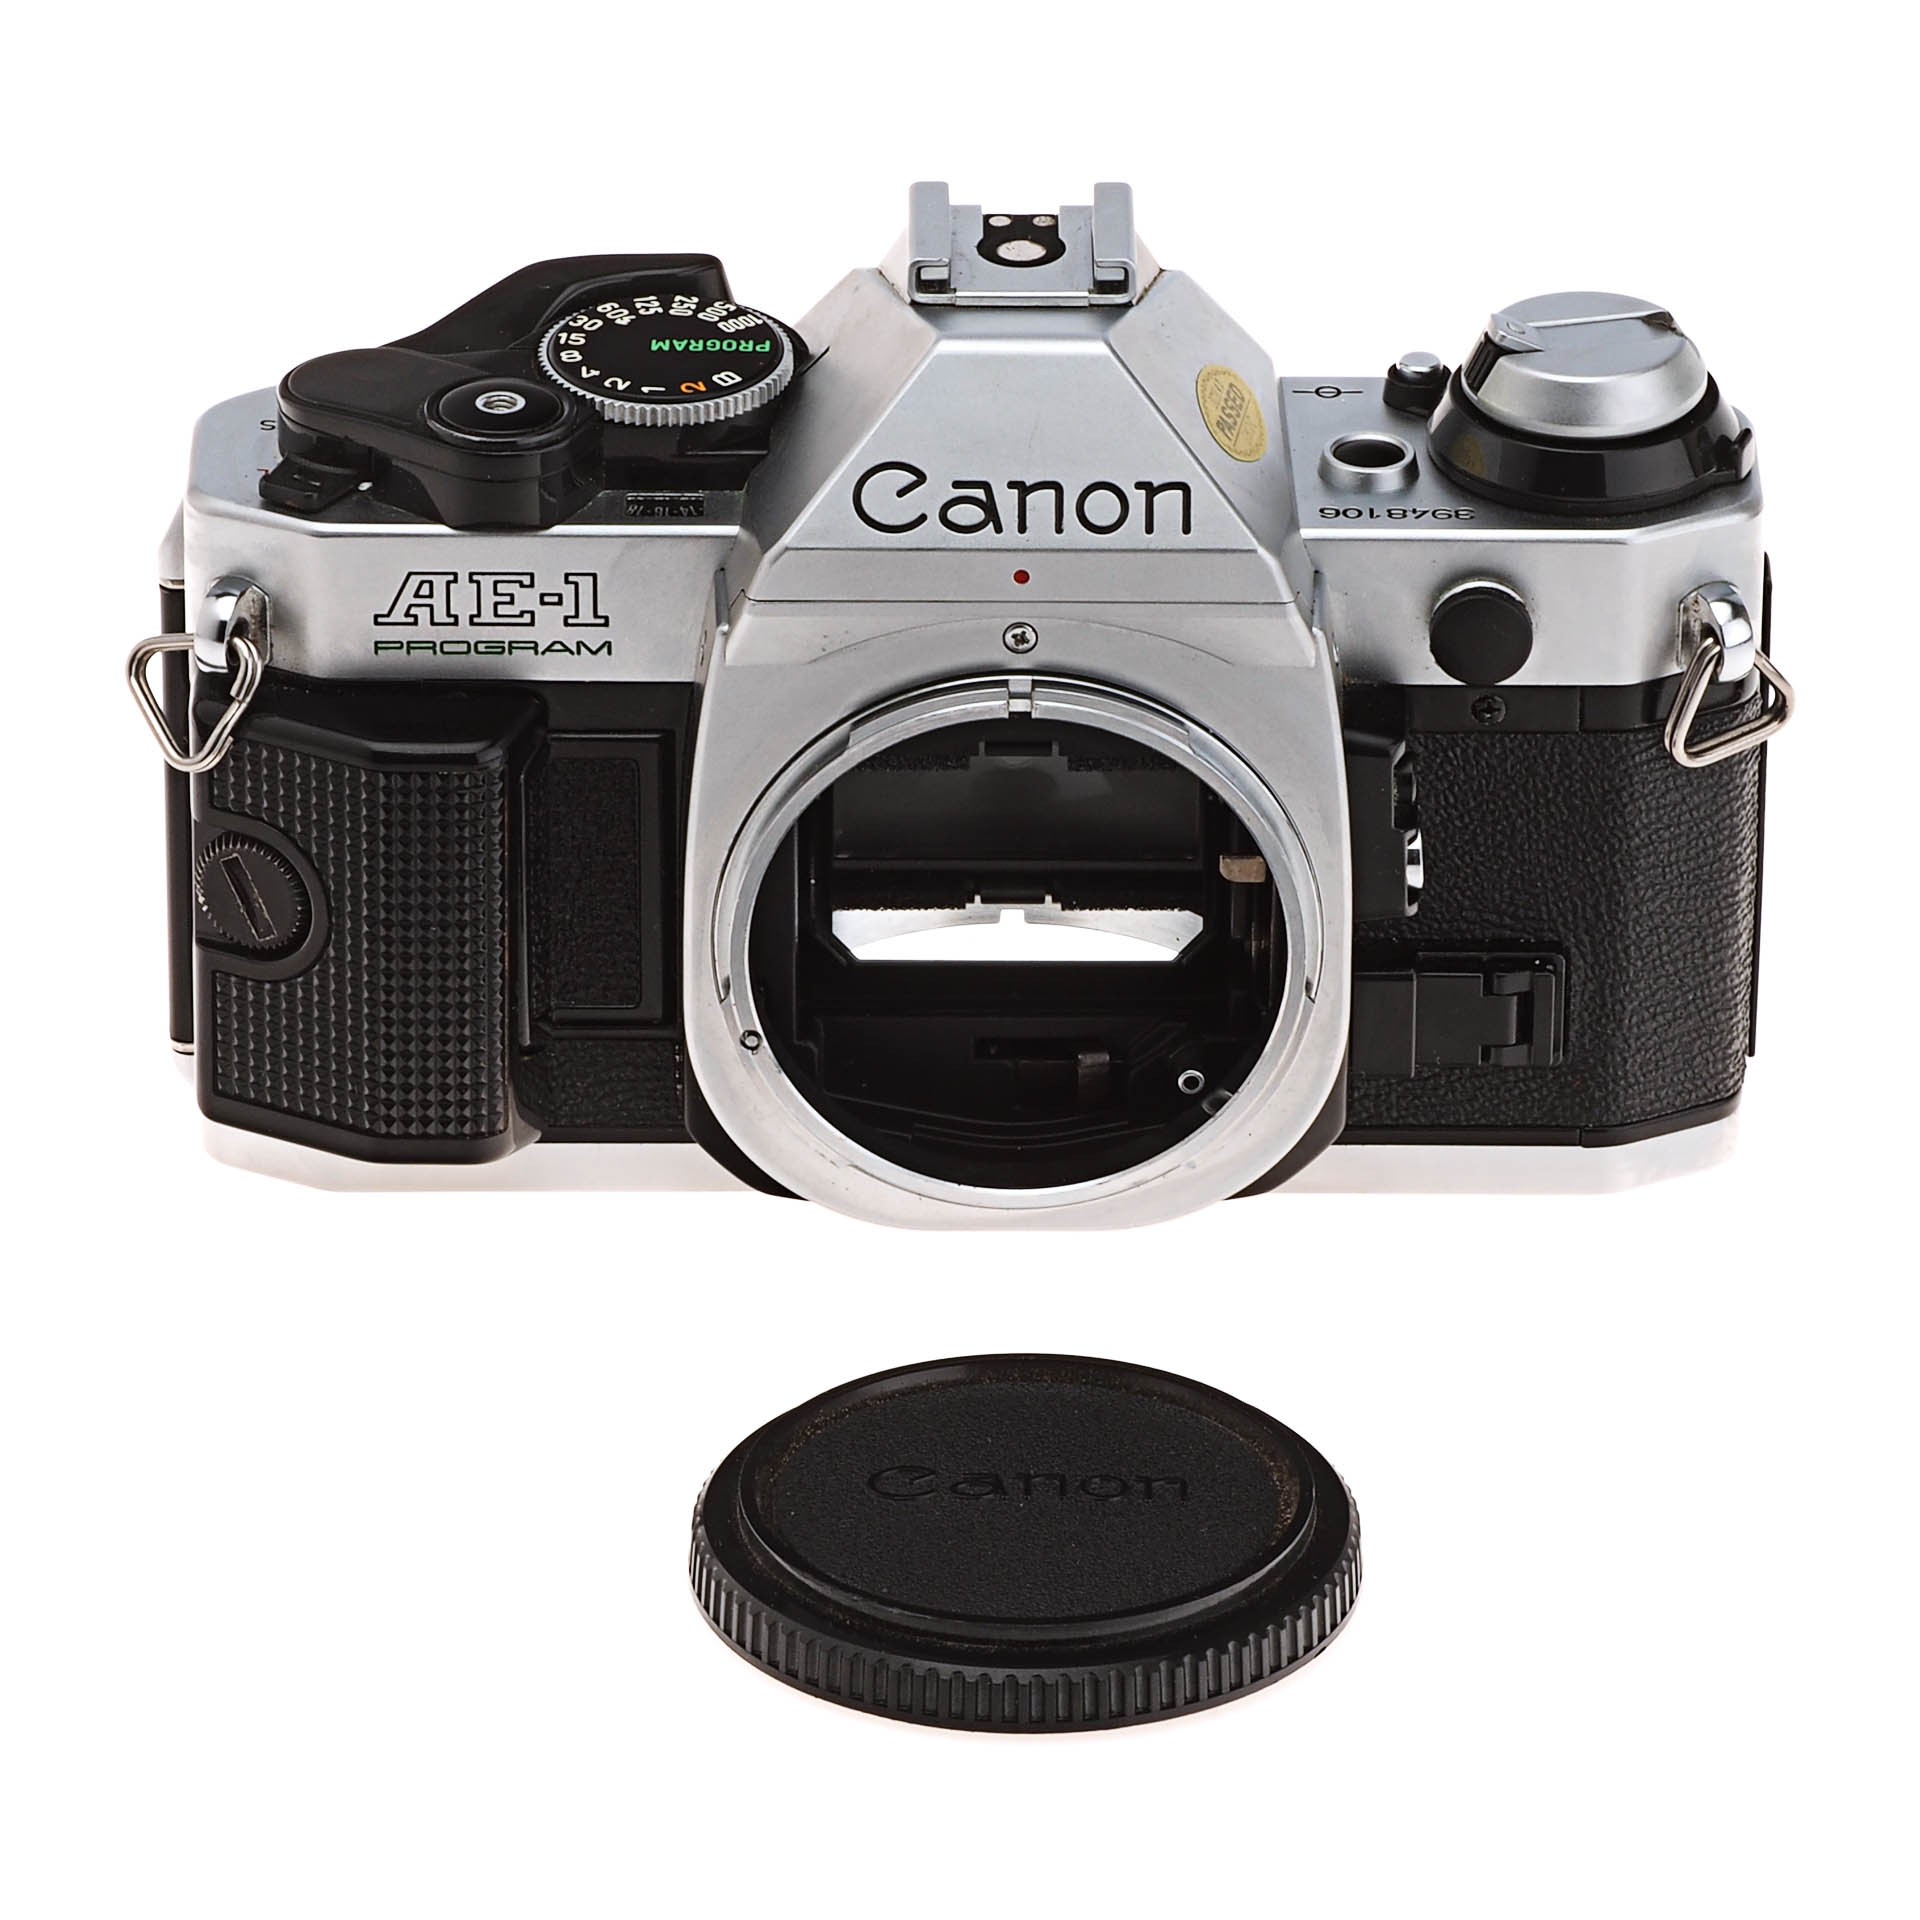 Roestig Geaccepteerd ruimte Buy Canon AE-1 Program 35mm Film SLR Camera Body - National Camera Exchange